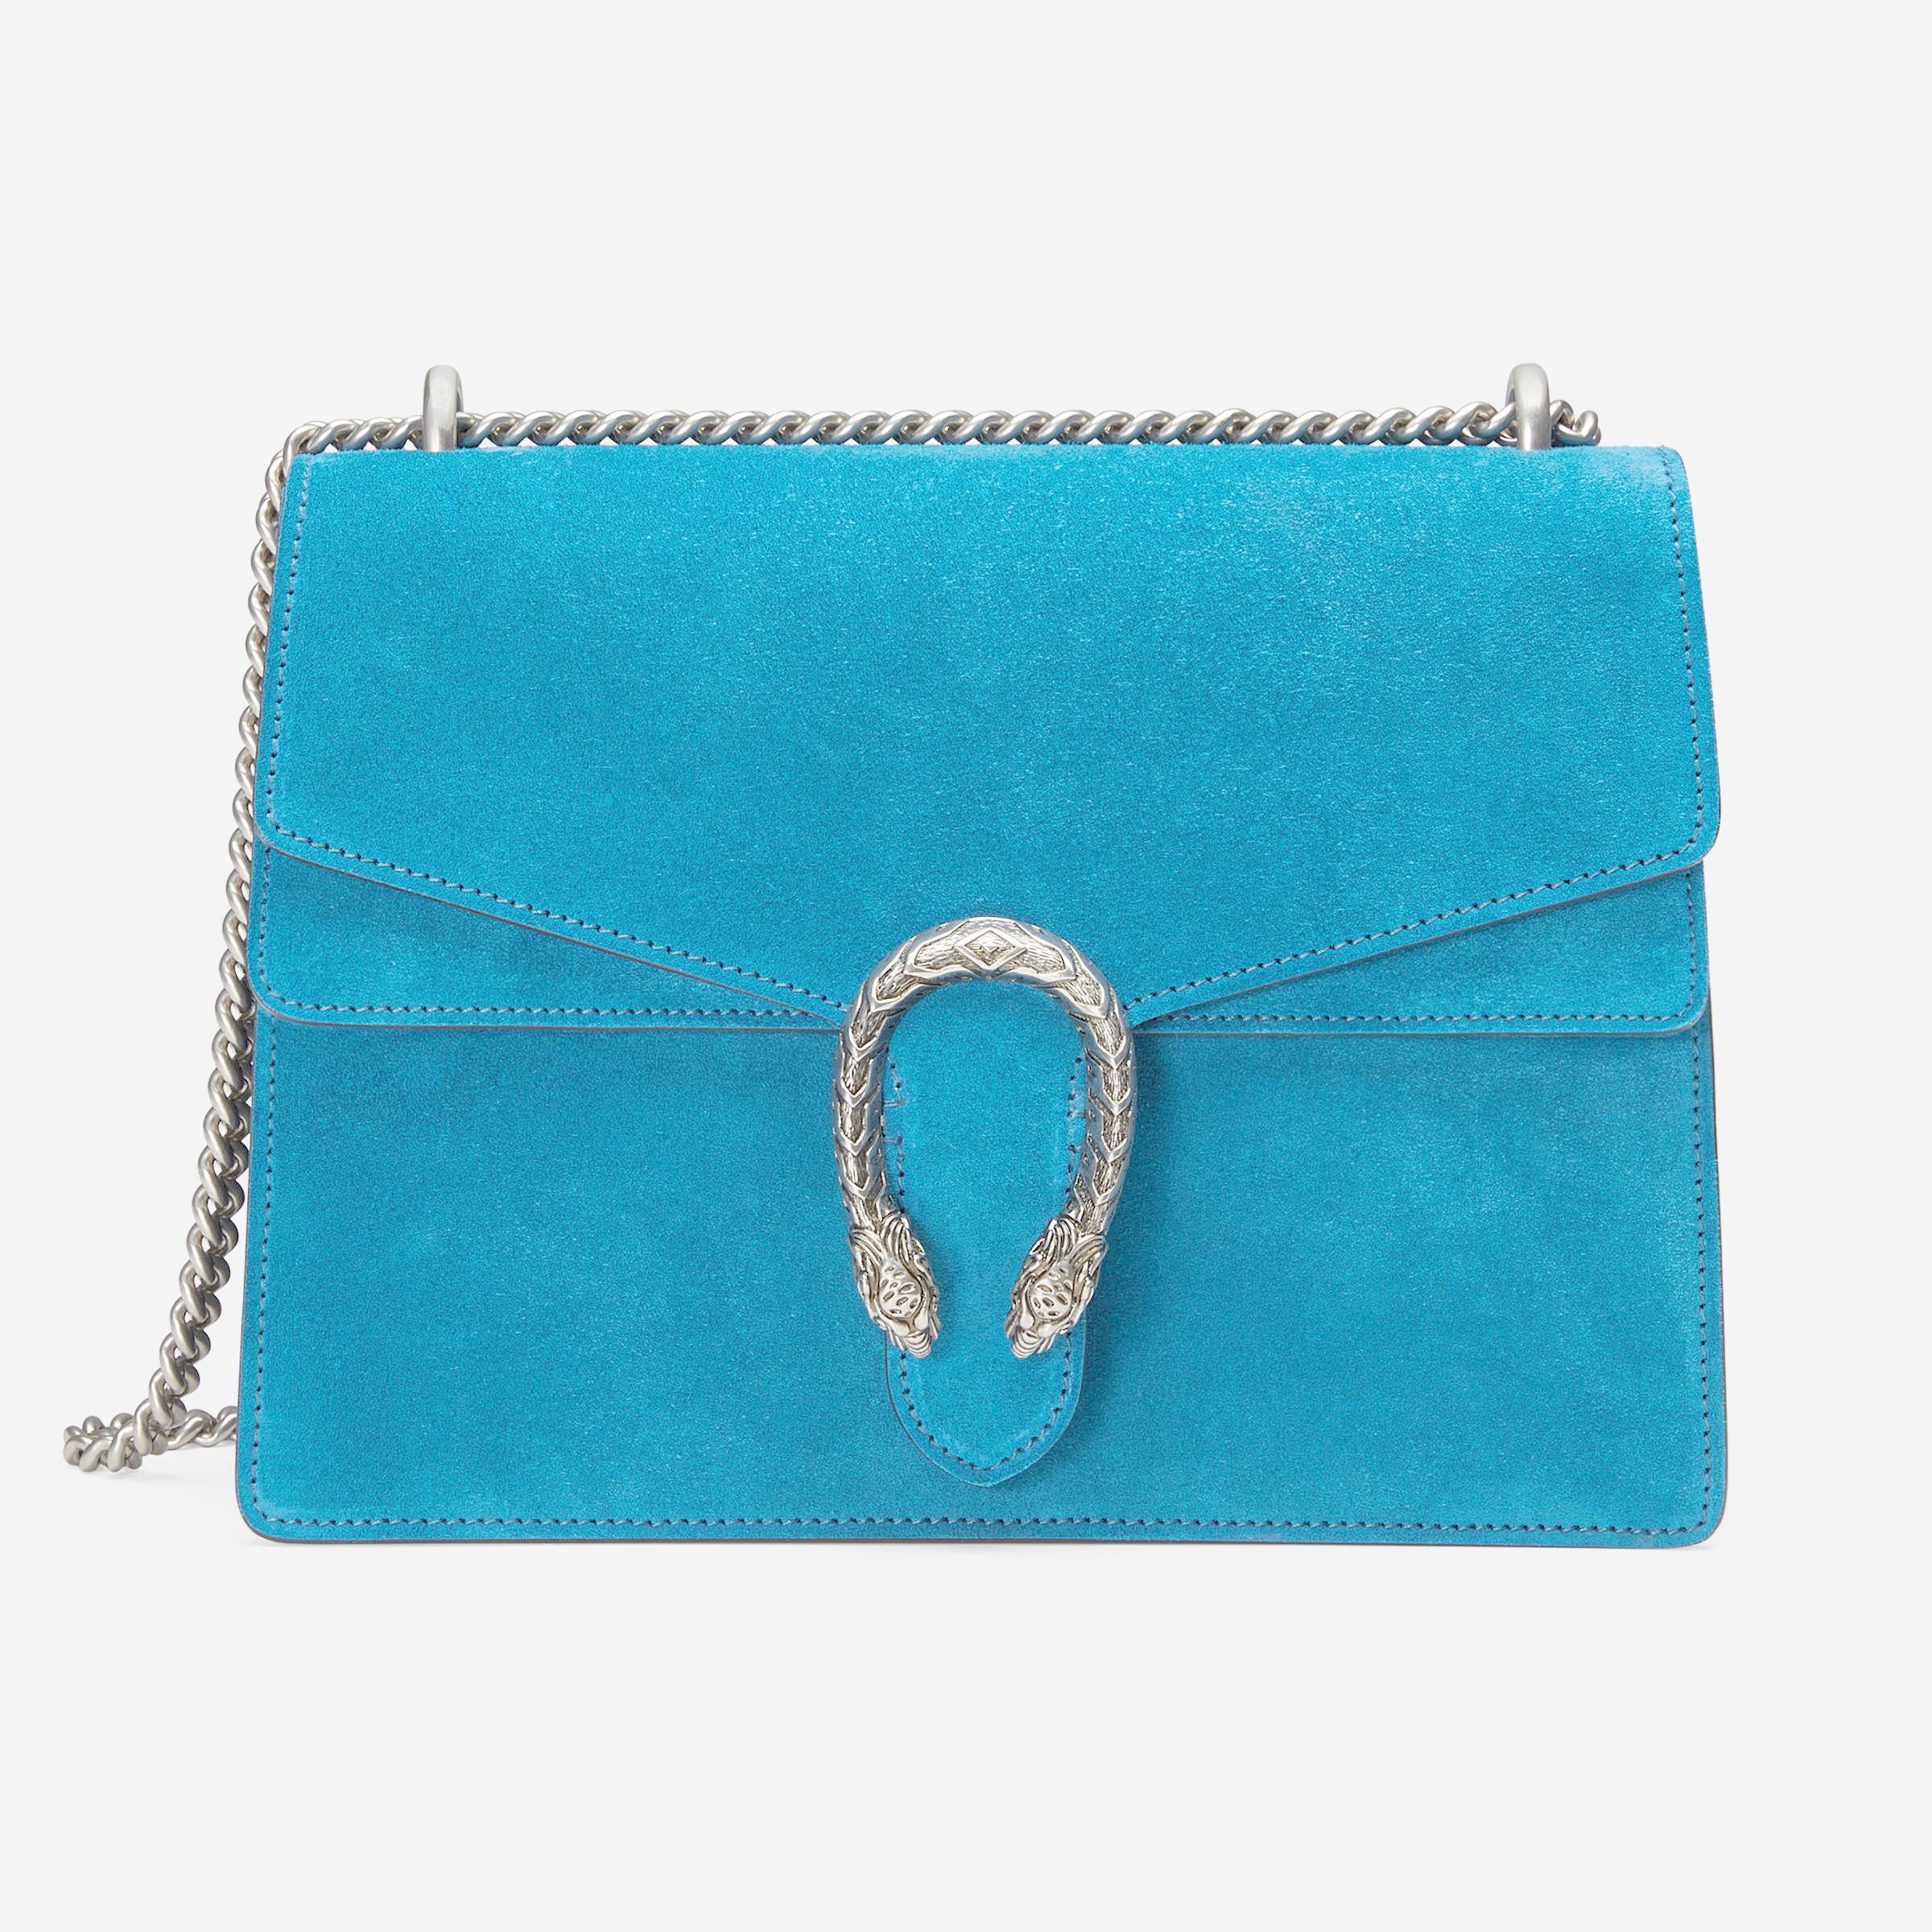 Lyst - Gucci Dionysus Suede Shoulder Bag in Blue